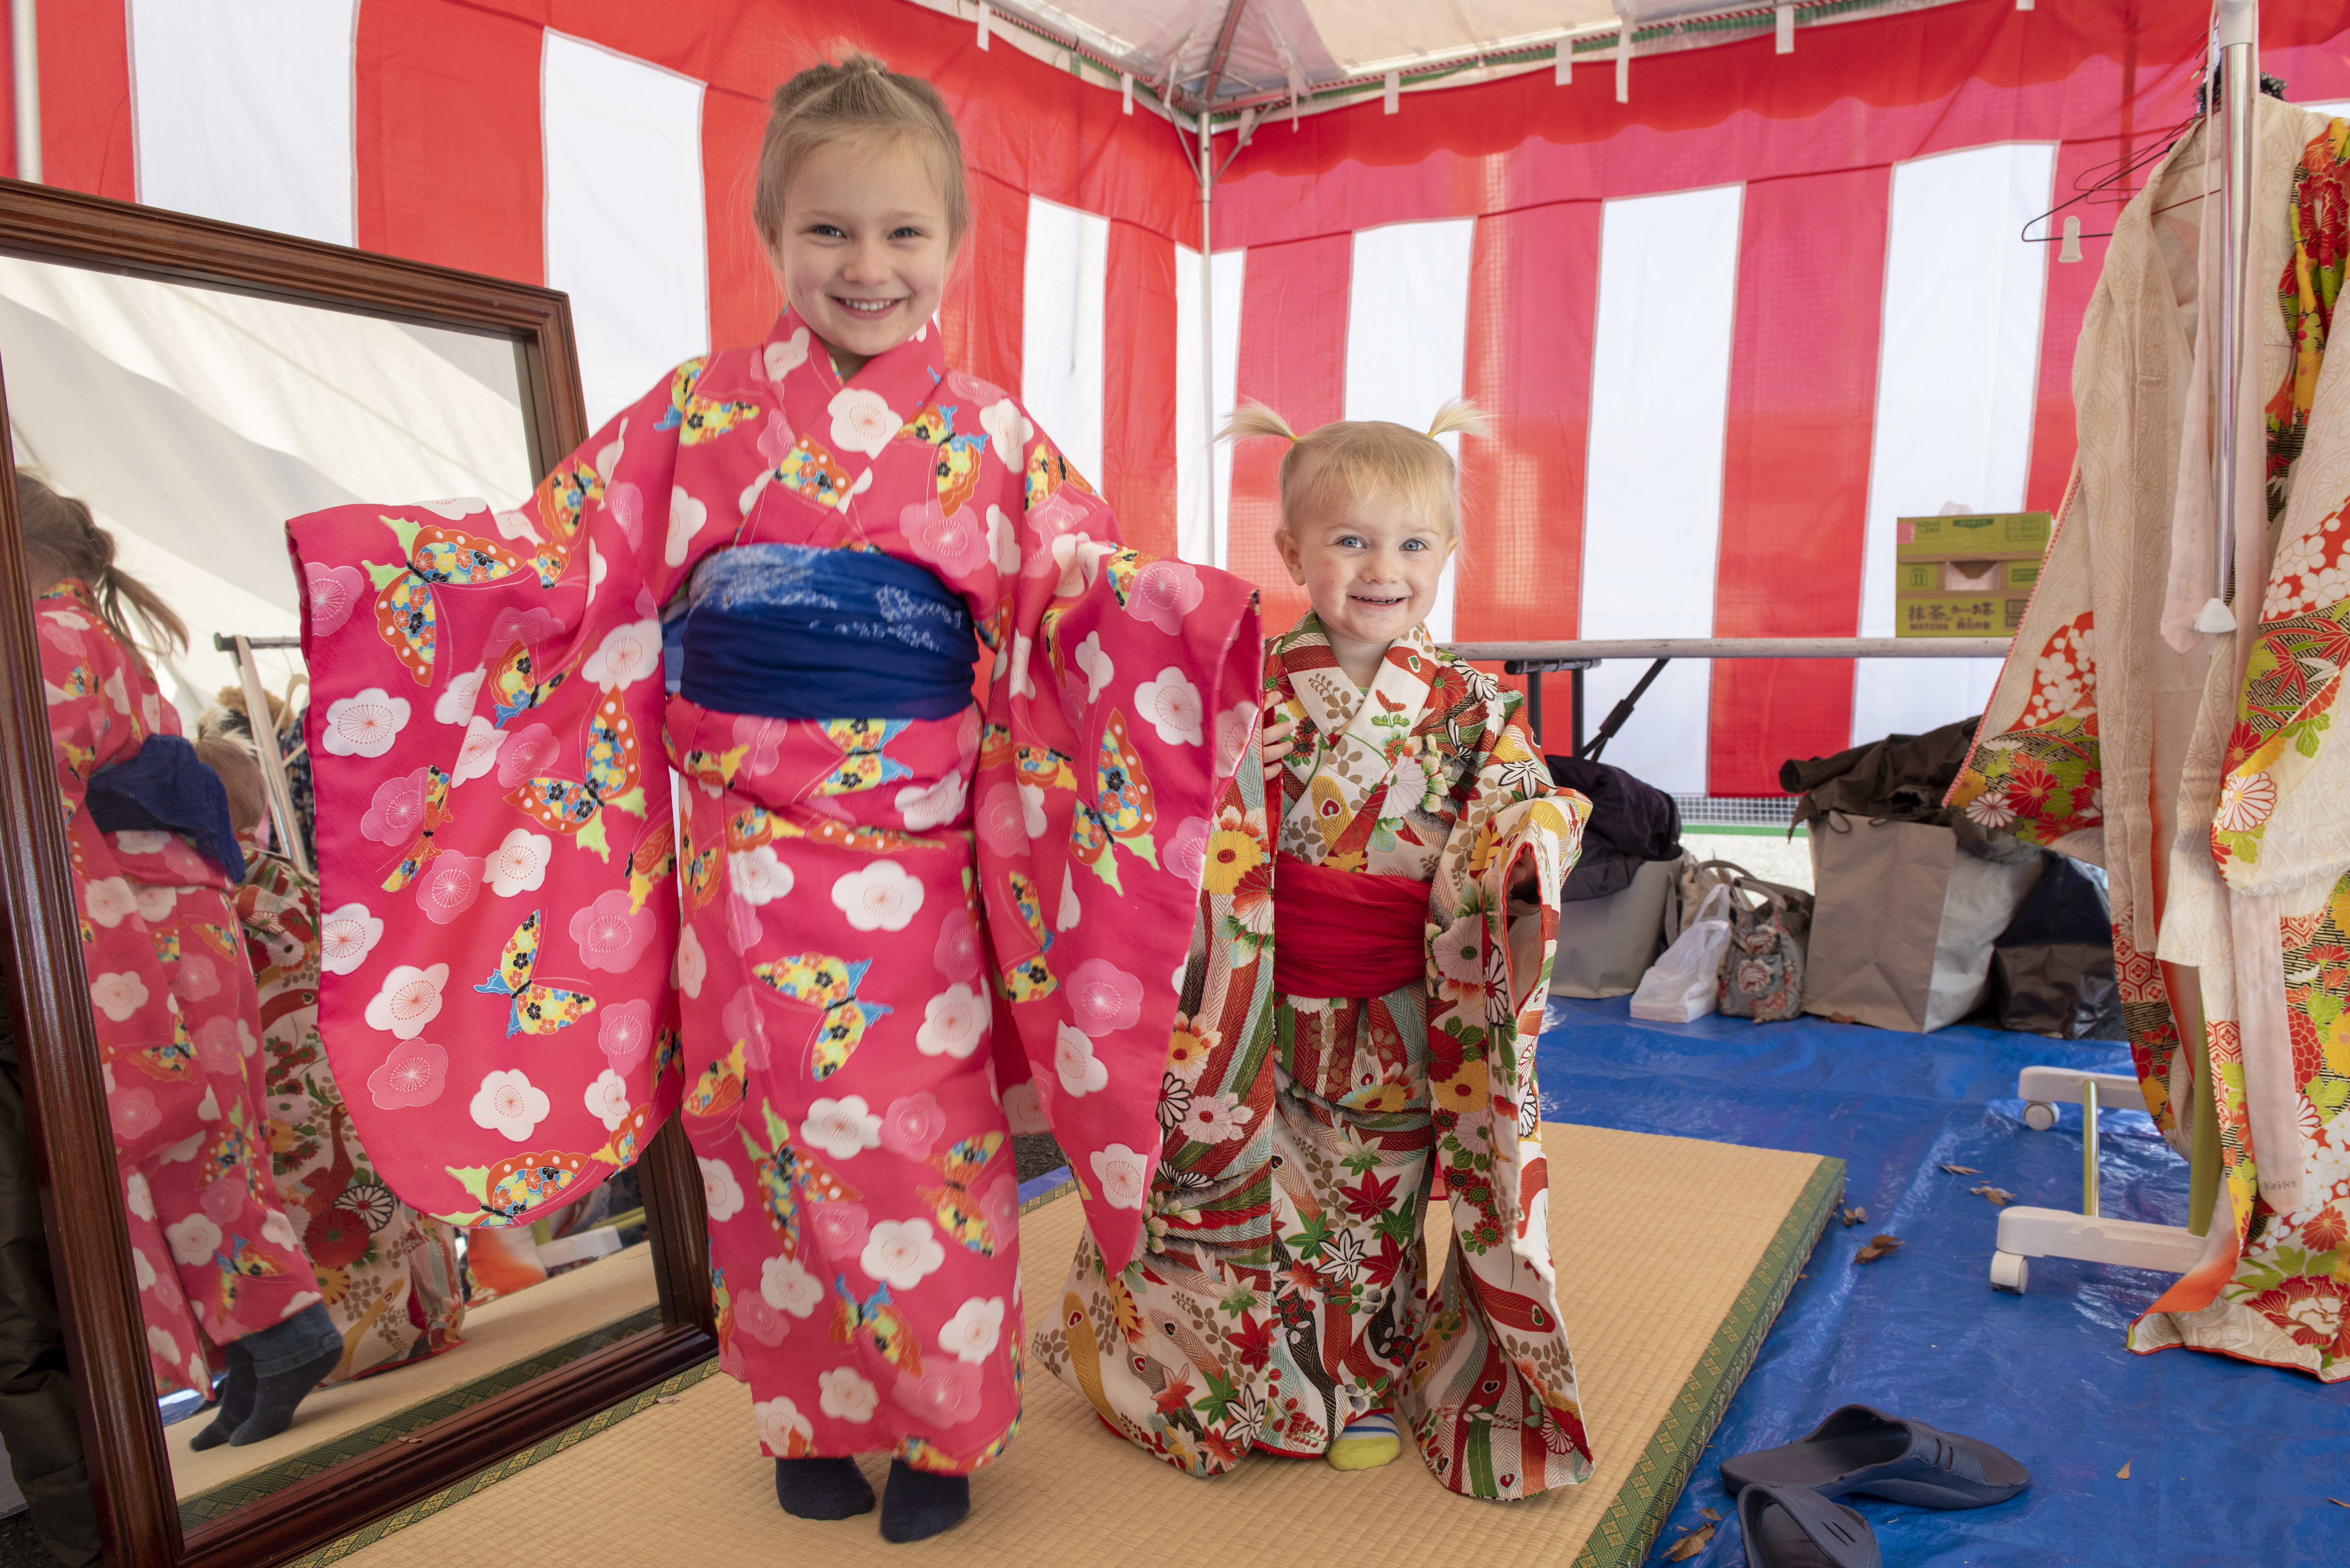 Little girls wearing kimonos